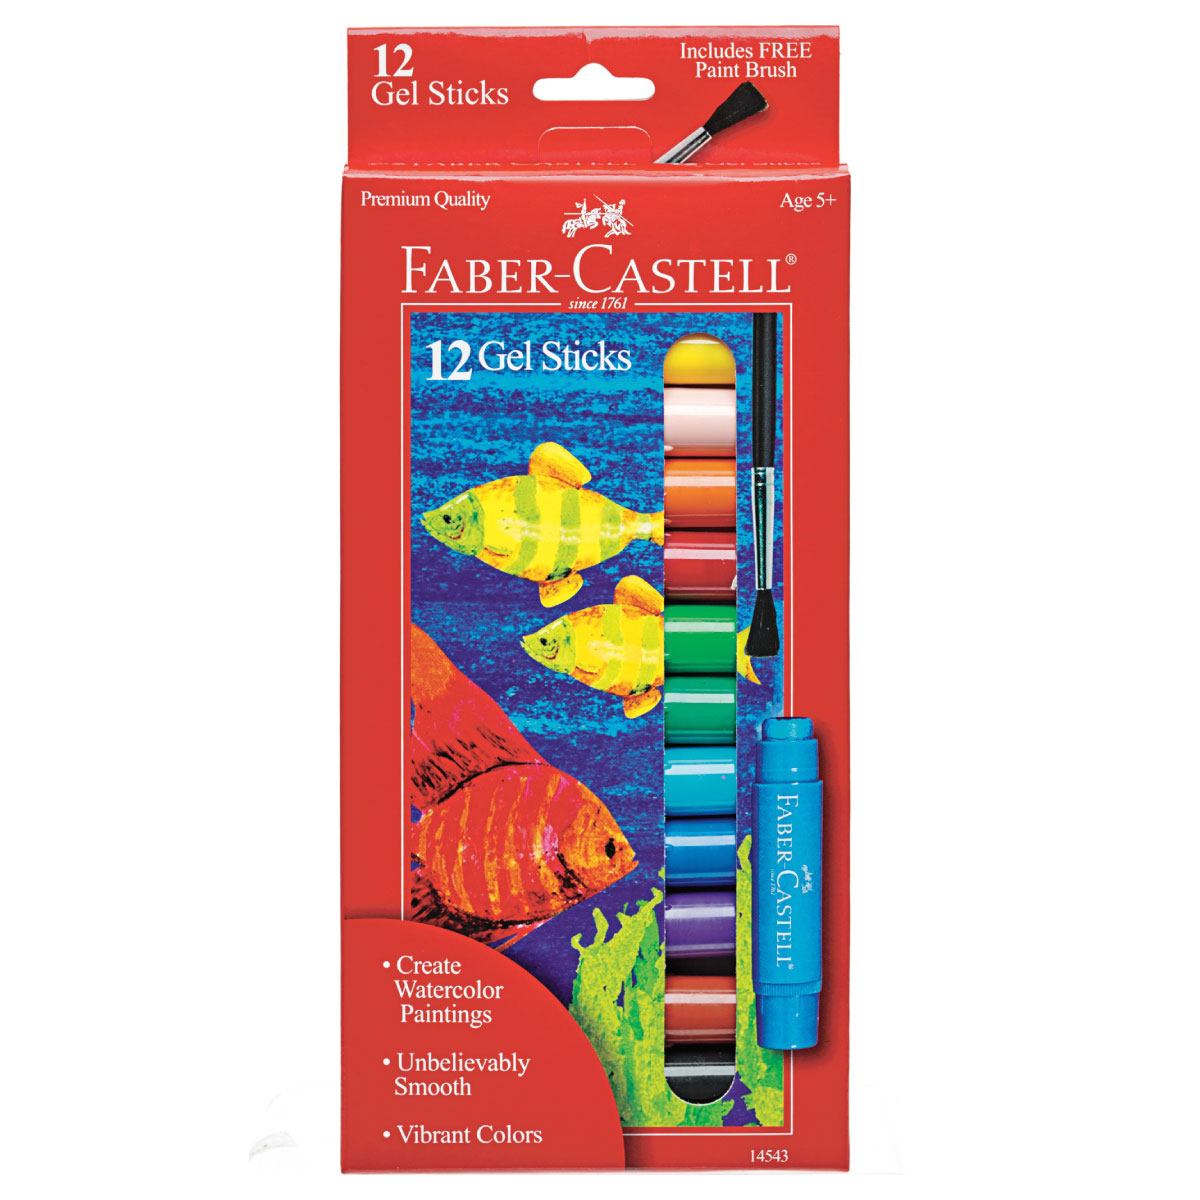 Faber-Castell 12 Gel Sticks